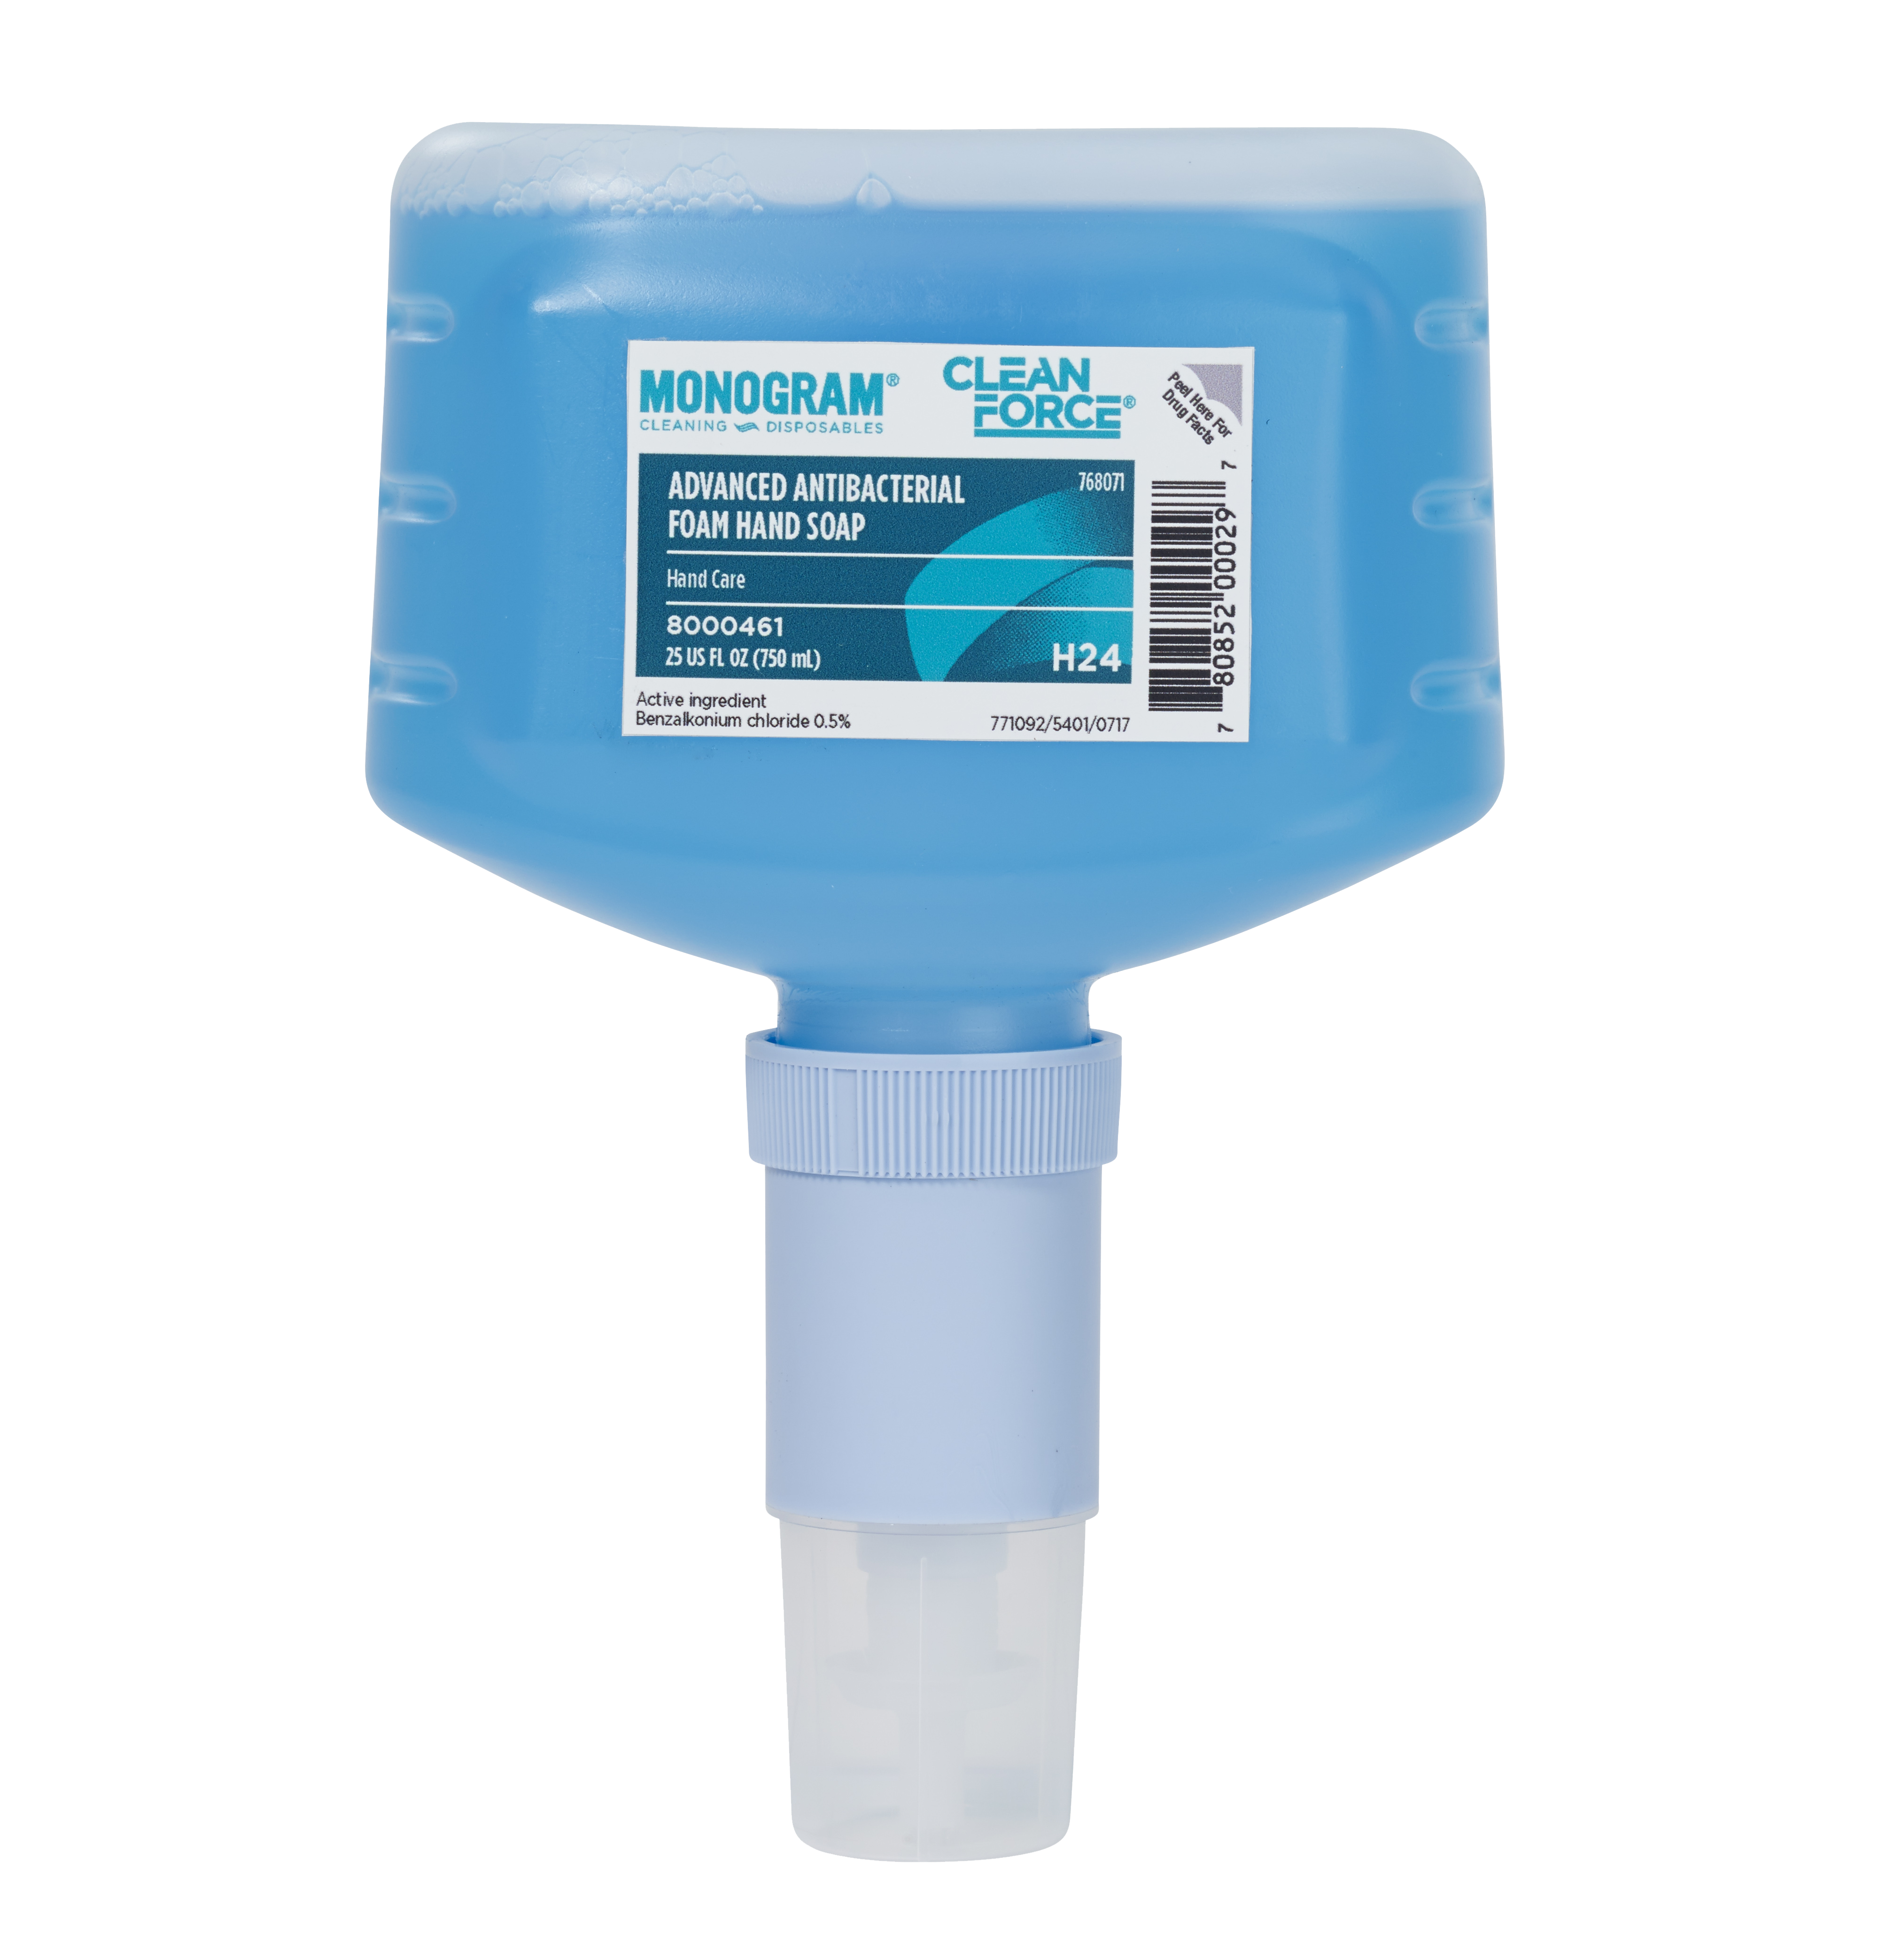 Monogram Clean Force Advanced Antibacterial Foam Hand Soap